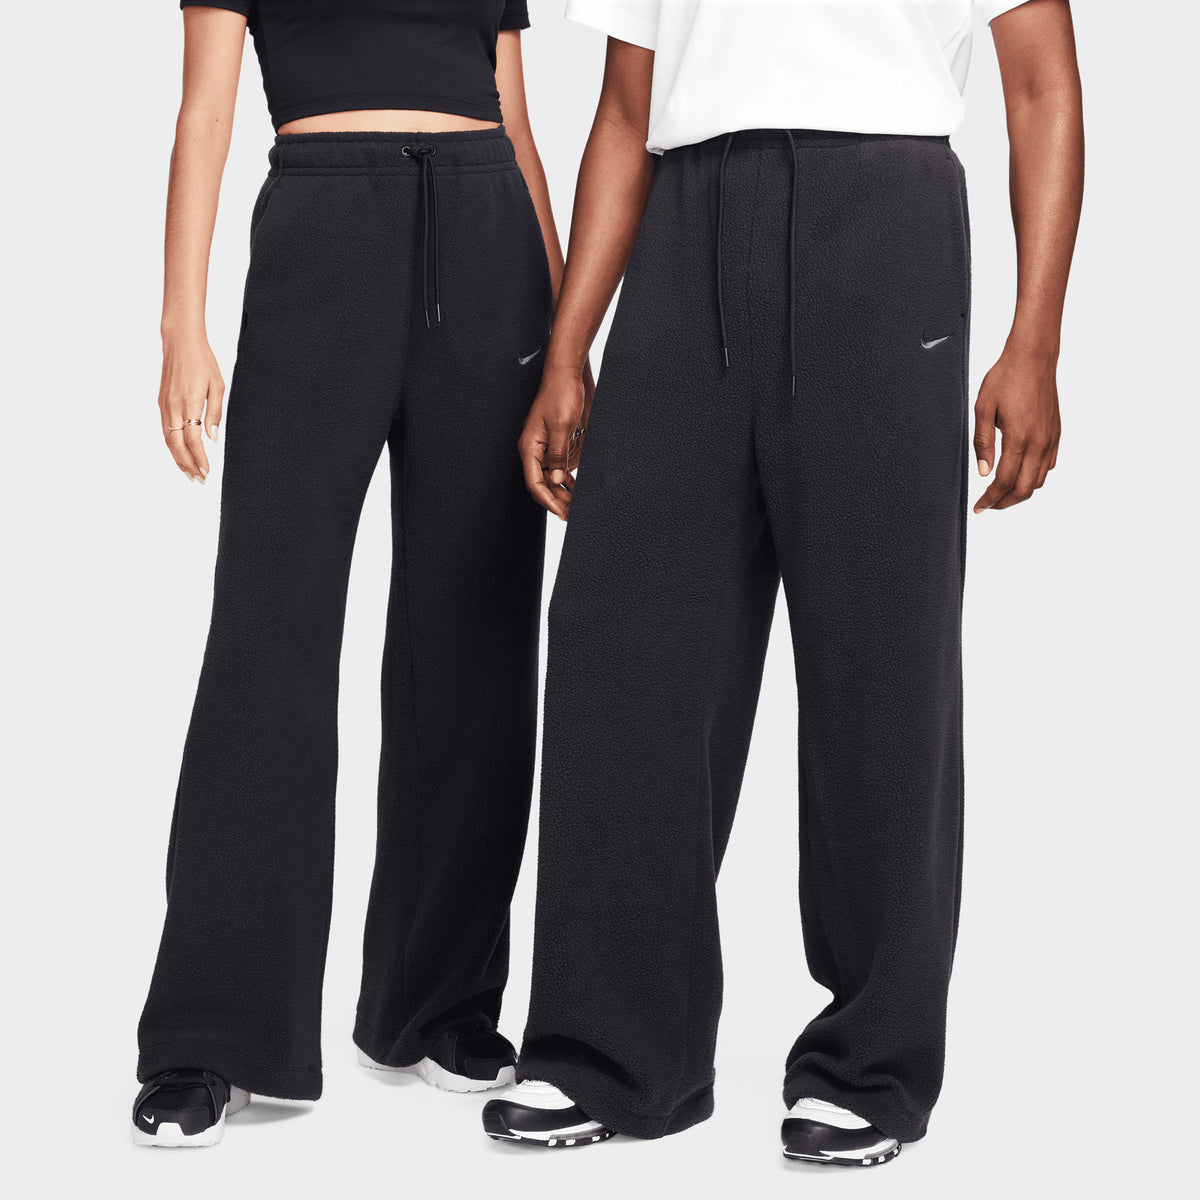 Nike Sportswear Women's Plush Pants Black / Dark Smoke Grey